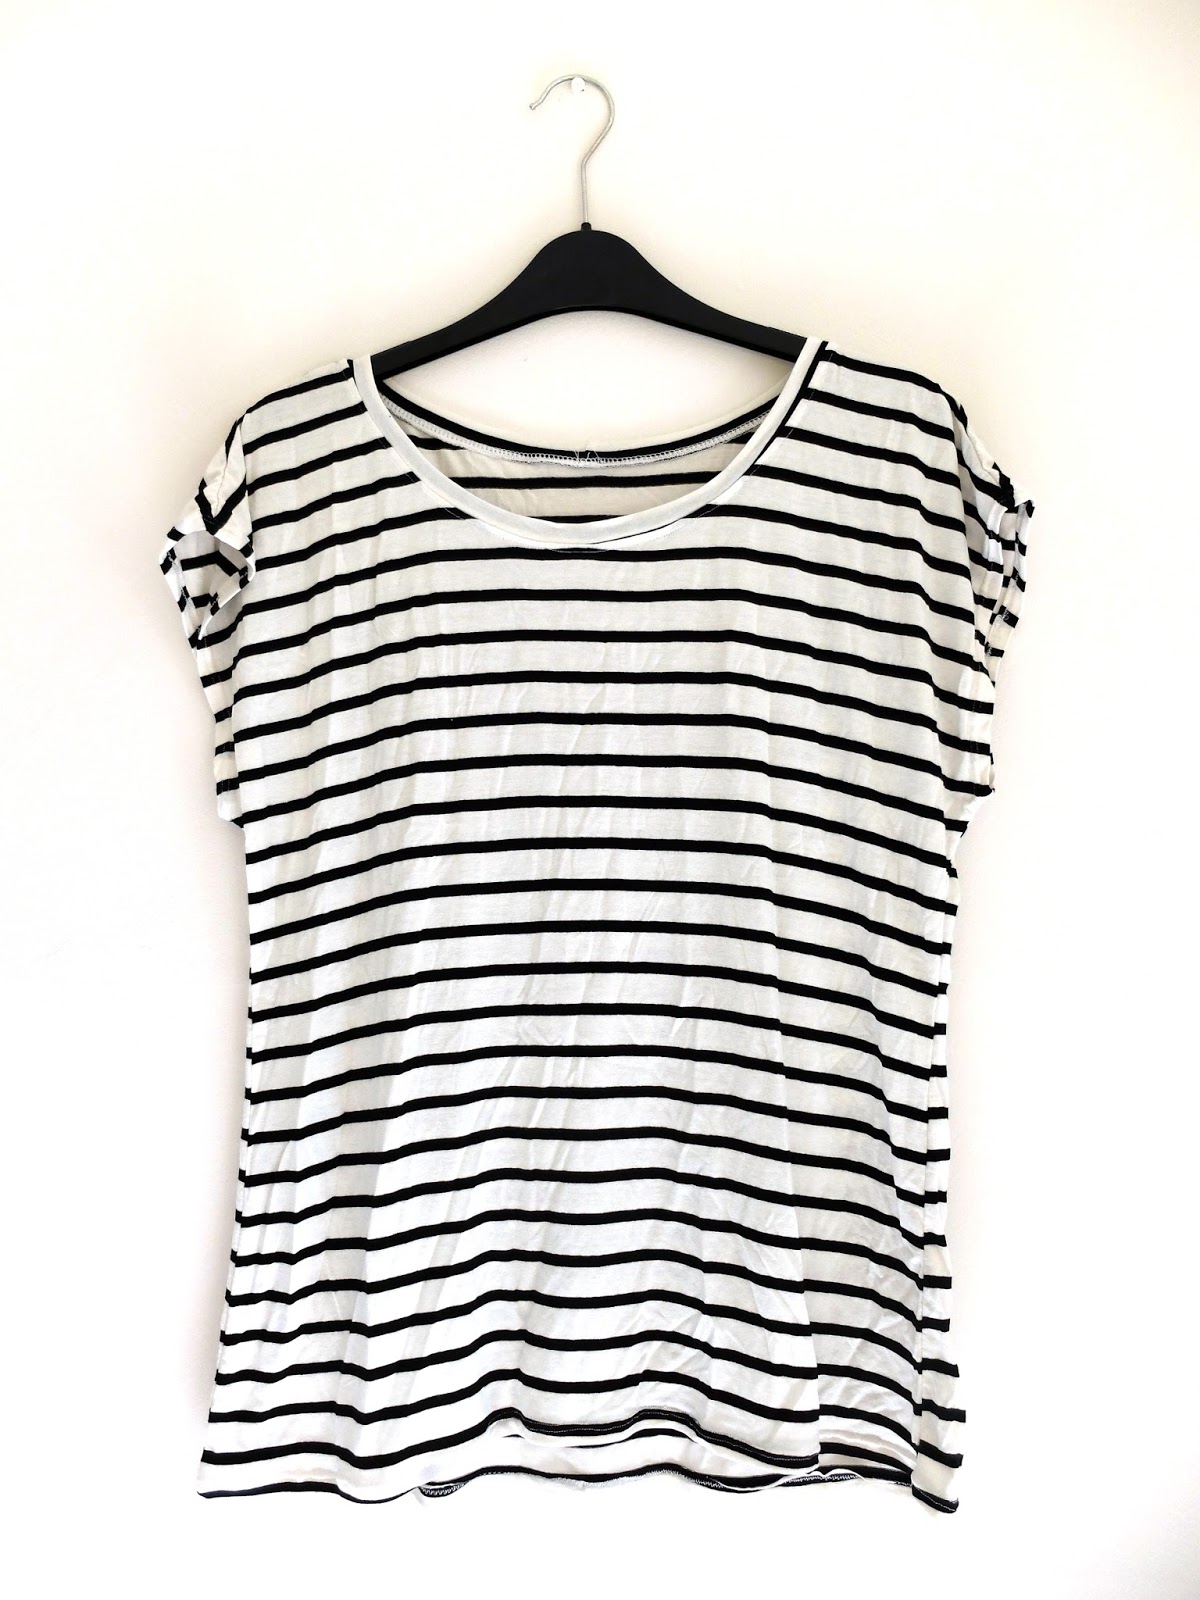 New Look 6216 - Striped baggy tshirts | The DIY Fox